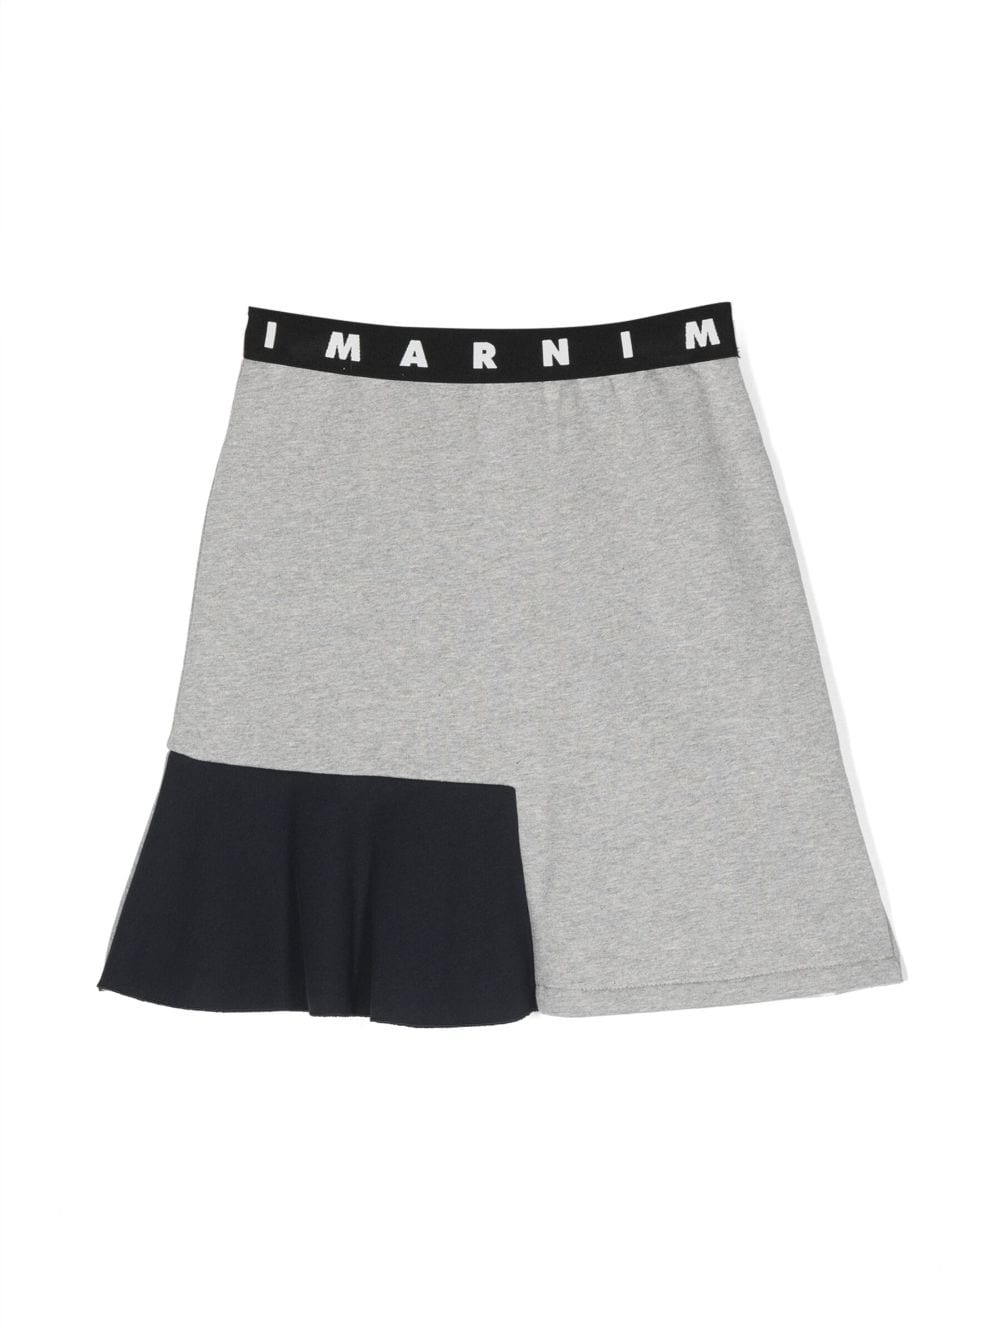 Marni Kids logo-band skirt - Grey